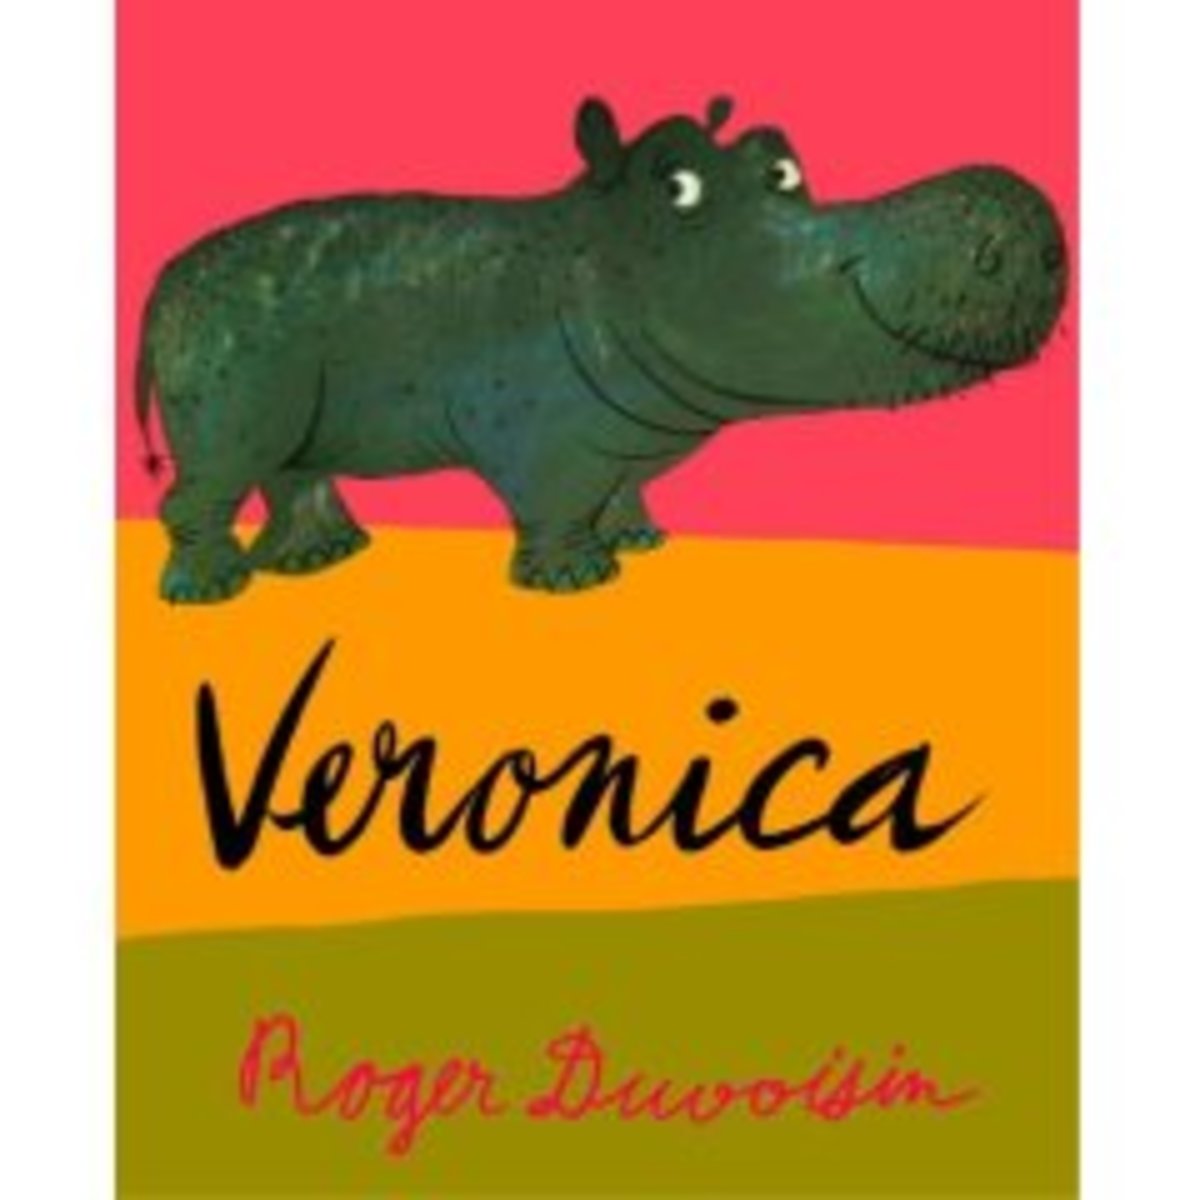 Veronica by Robert Duvoisin